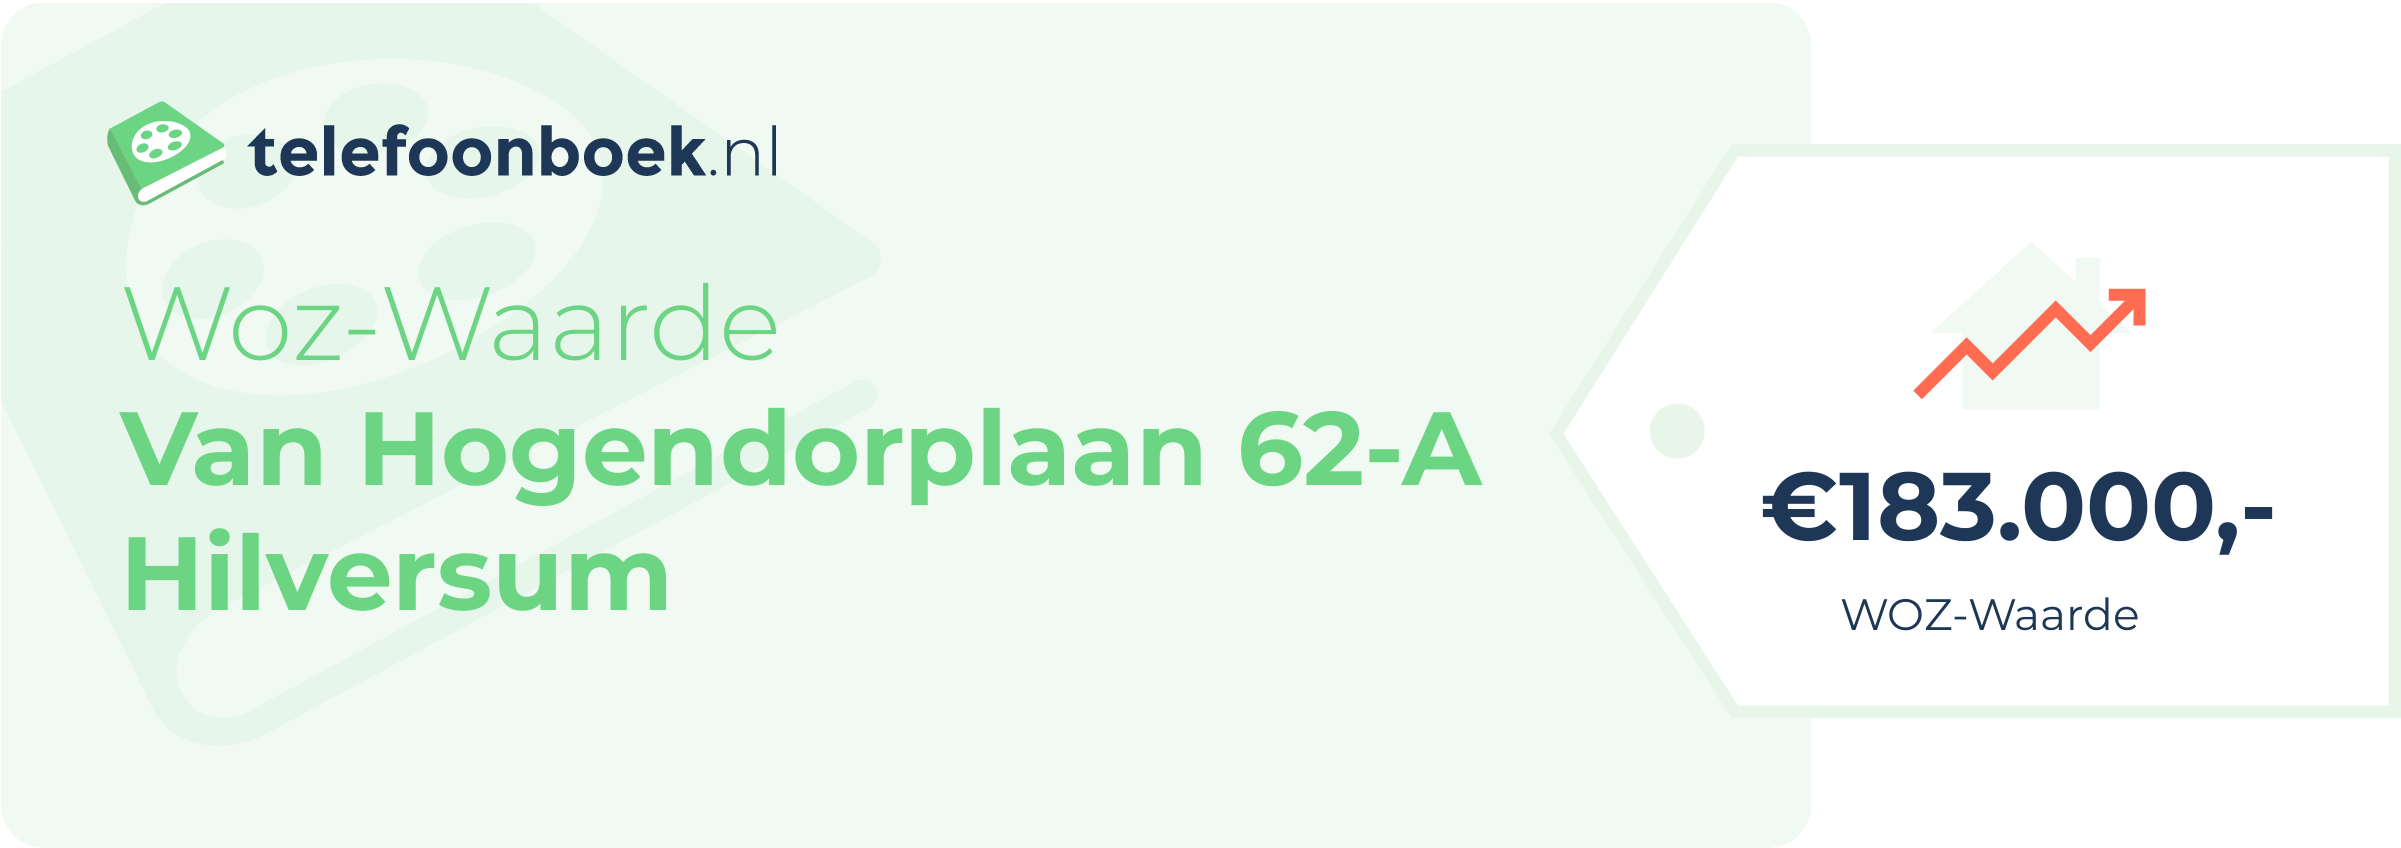 WOZ-waarde Van Hogendorplaan 62-A Hilversum